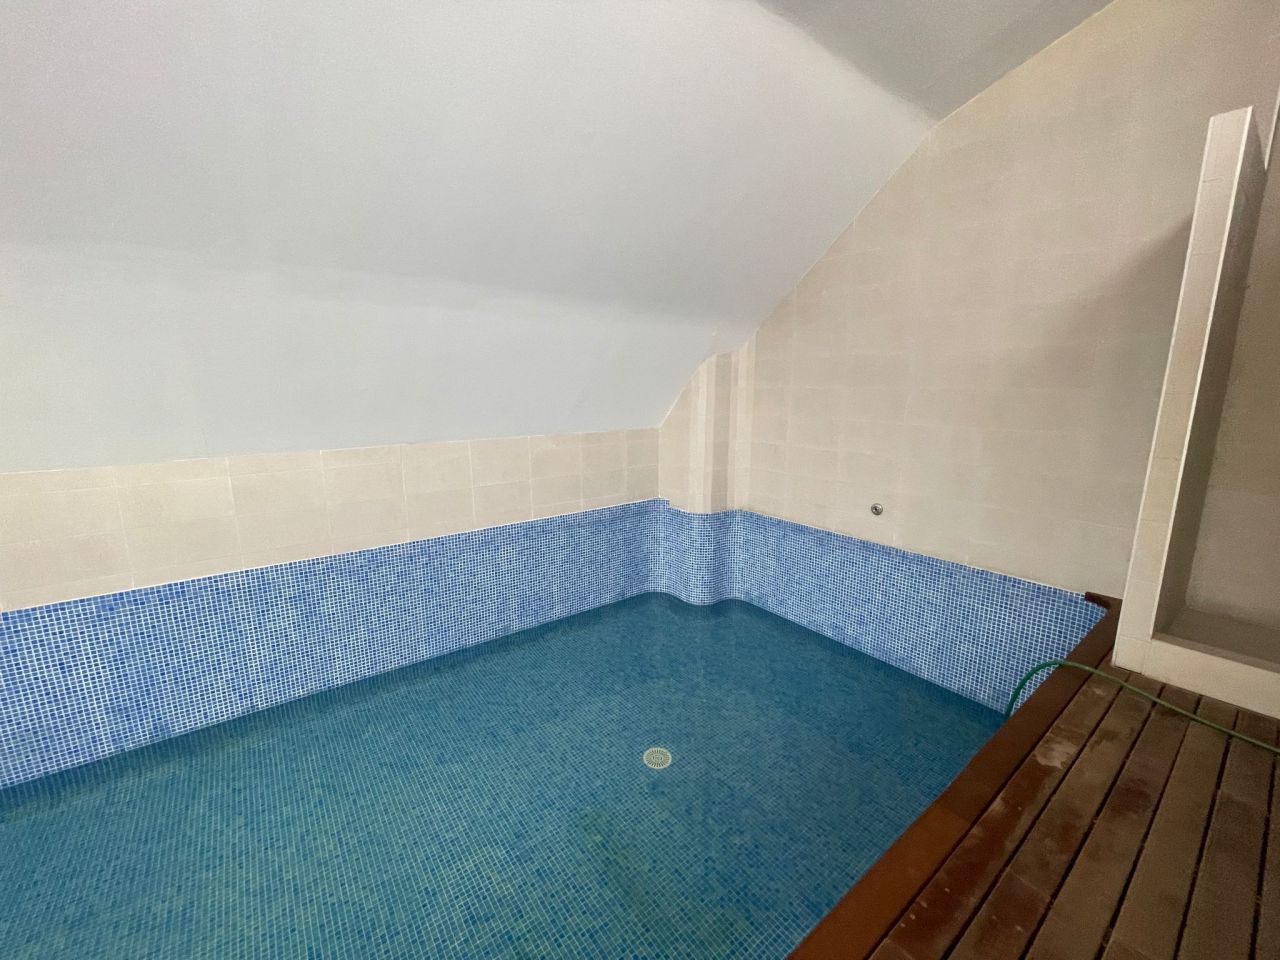 Ref. 1880 - Piso en Putxet - Sant Gervasi, completamente rehabilitado con piscina